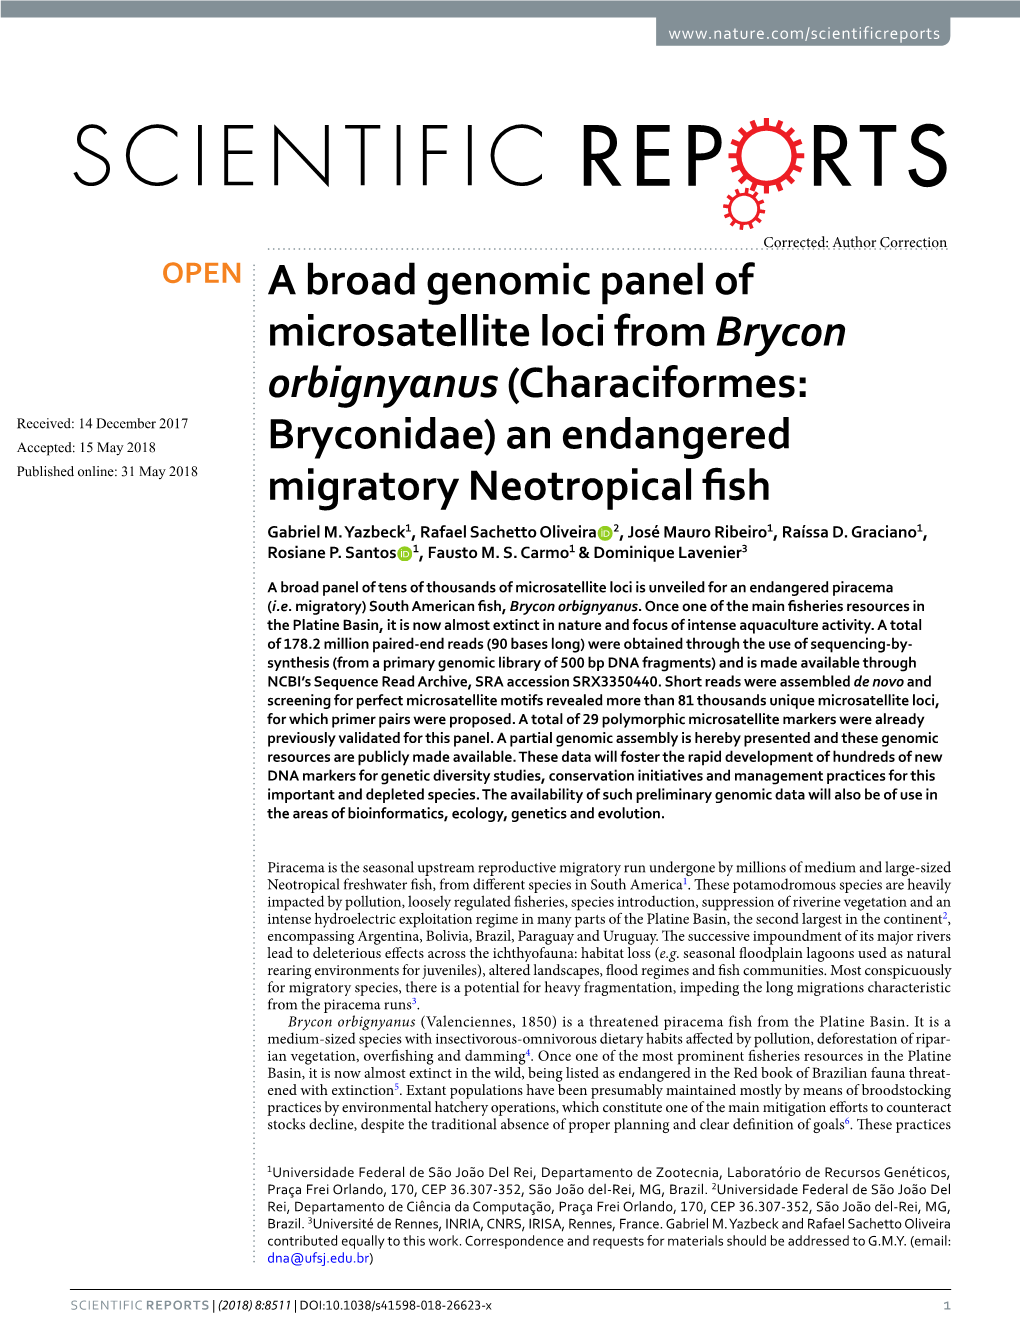 A Broad Genomic Panel of Microsatellite Loci from Brycon